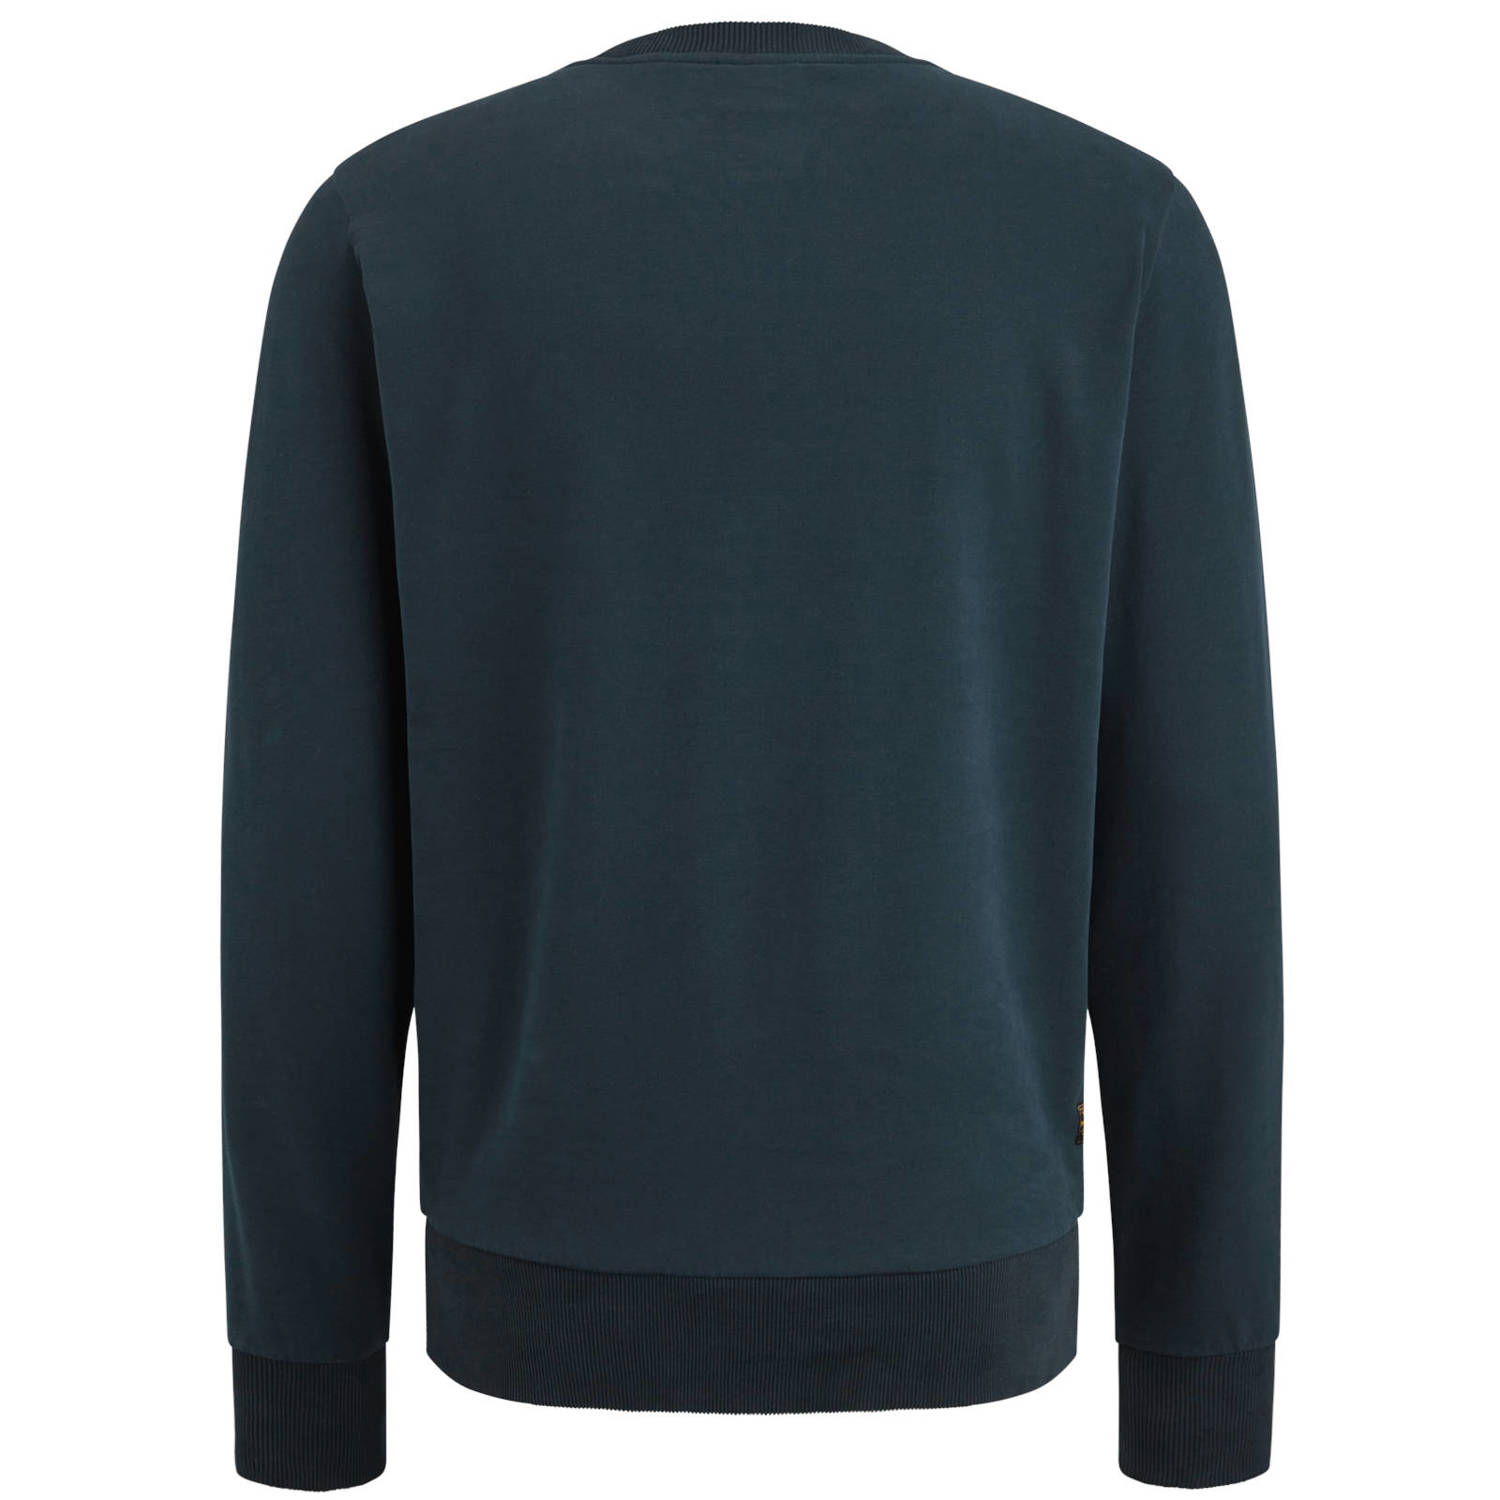 PME Legend sweater met printopdruk donkerblauw